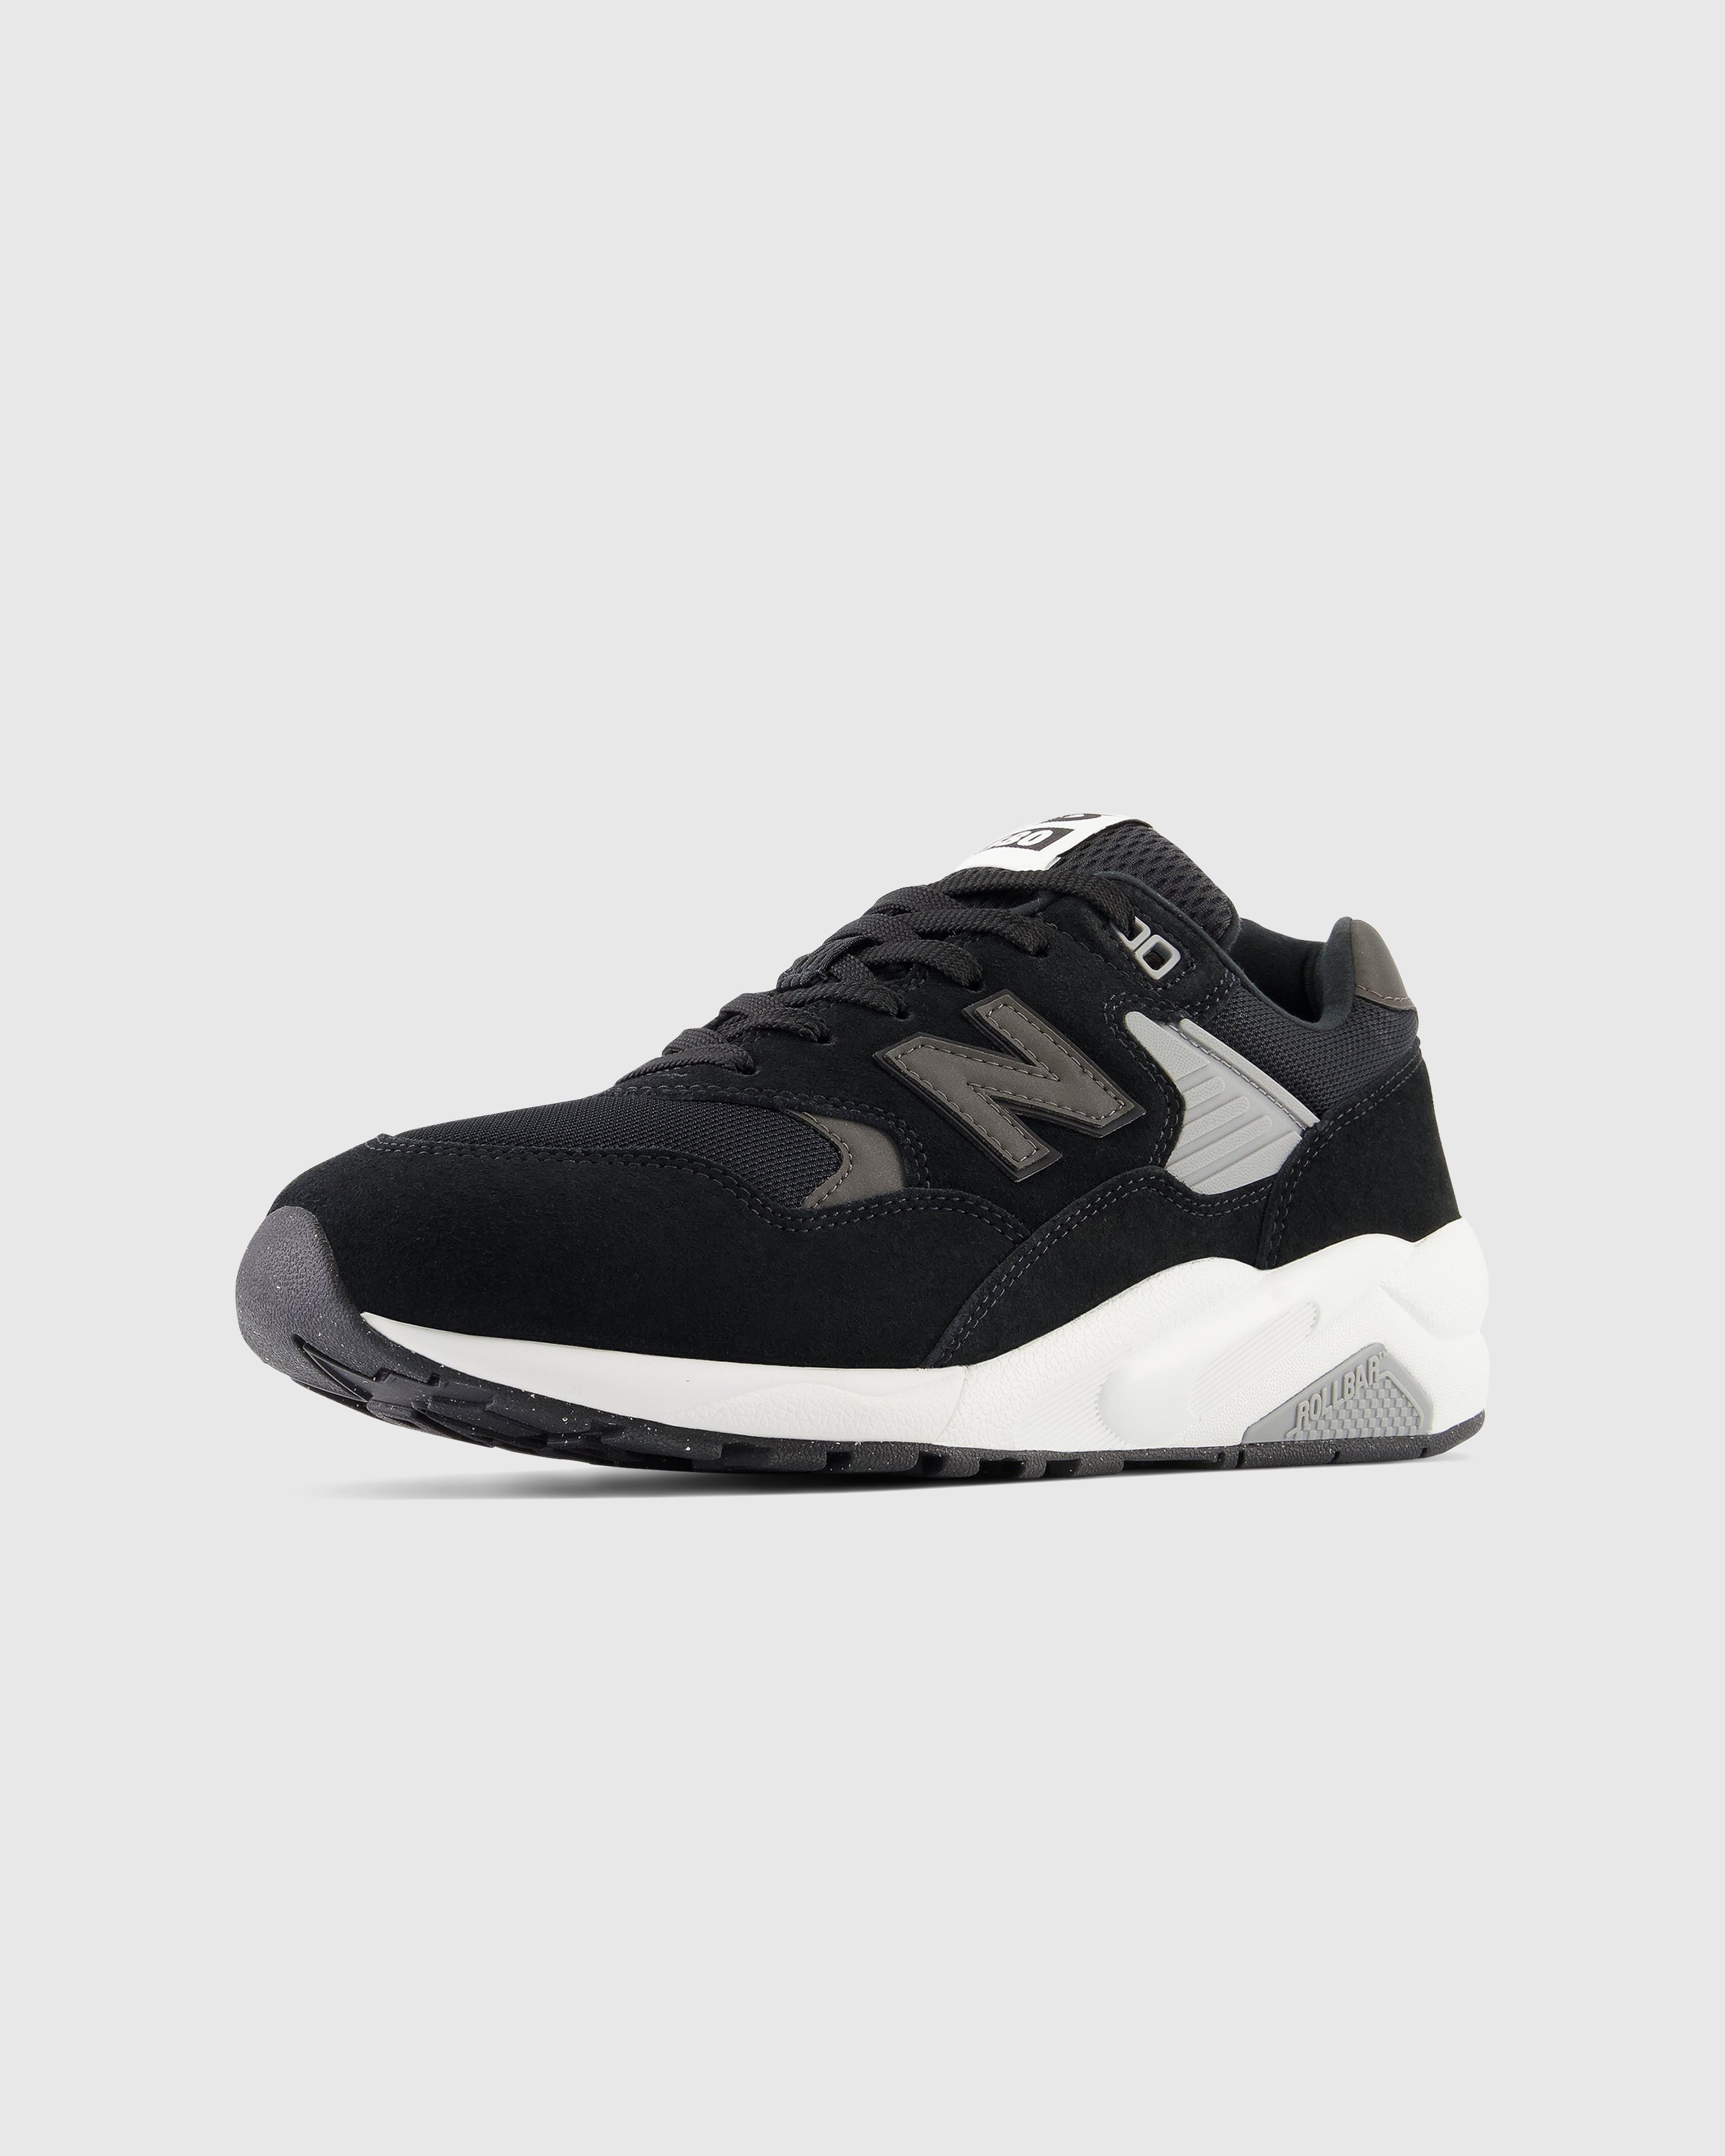 New Balance - 580 Black/Grey/White - Footwear - Black - Image 4